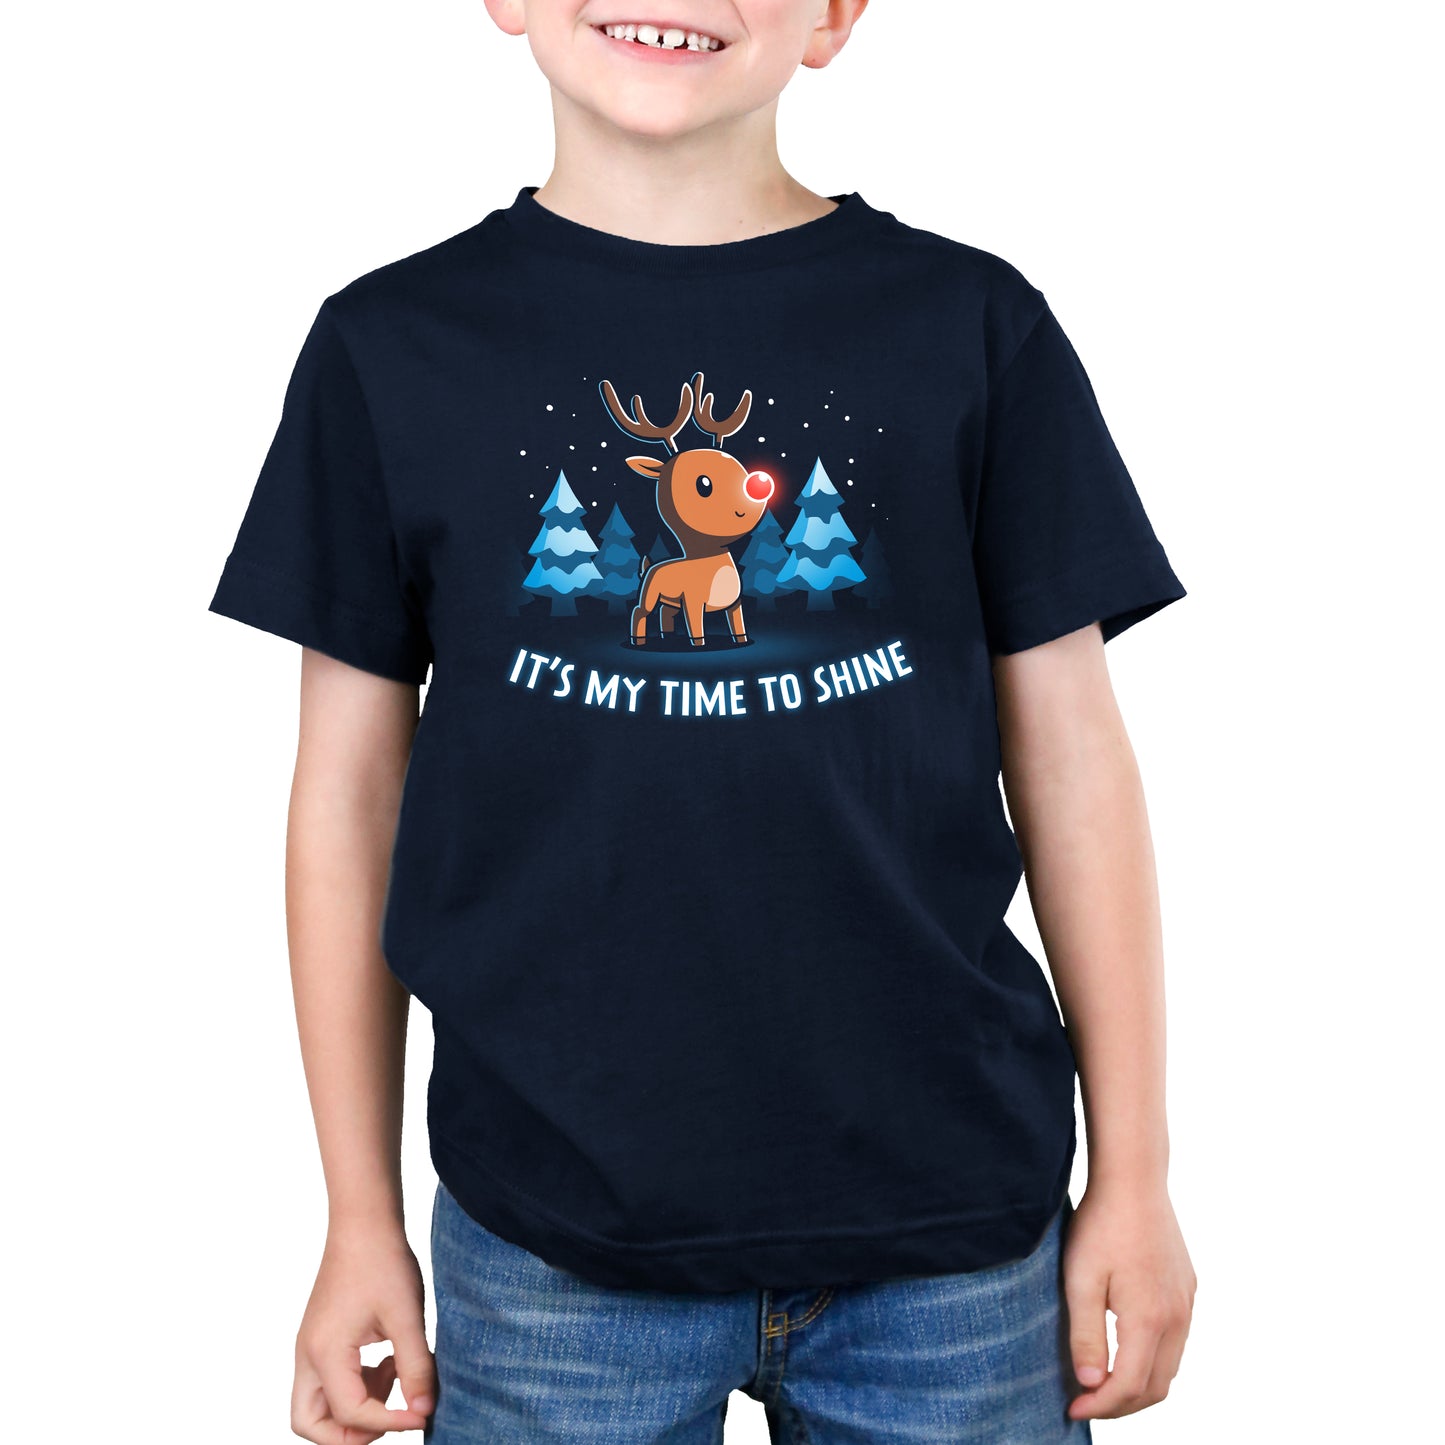 Description: A boy wearing a TeeTurtle "It's My Time To Shine" t-shirt.